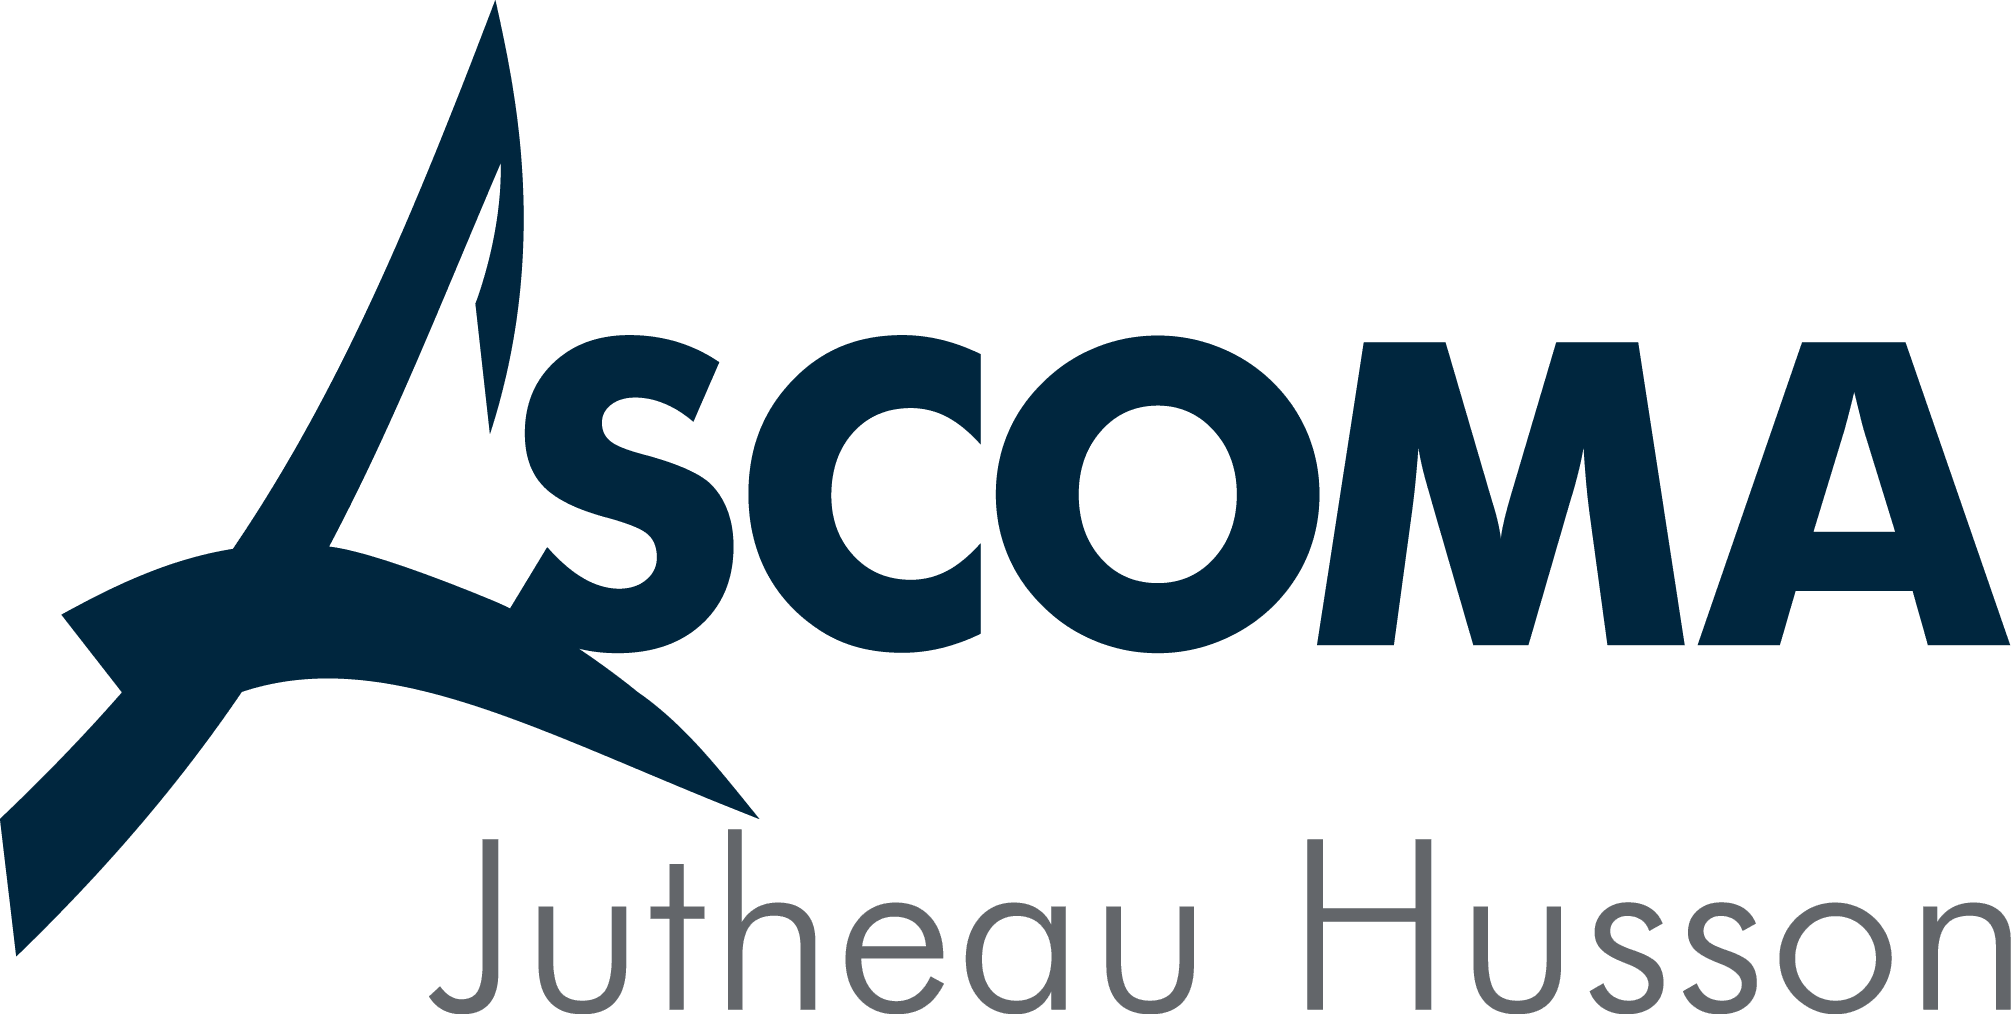 Ascoma Jutheau Husson Logo